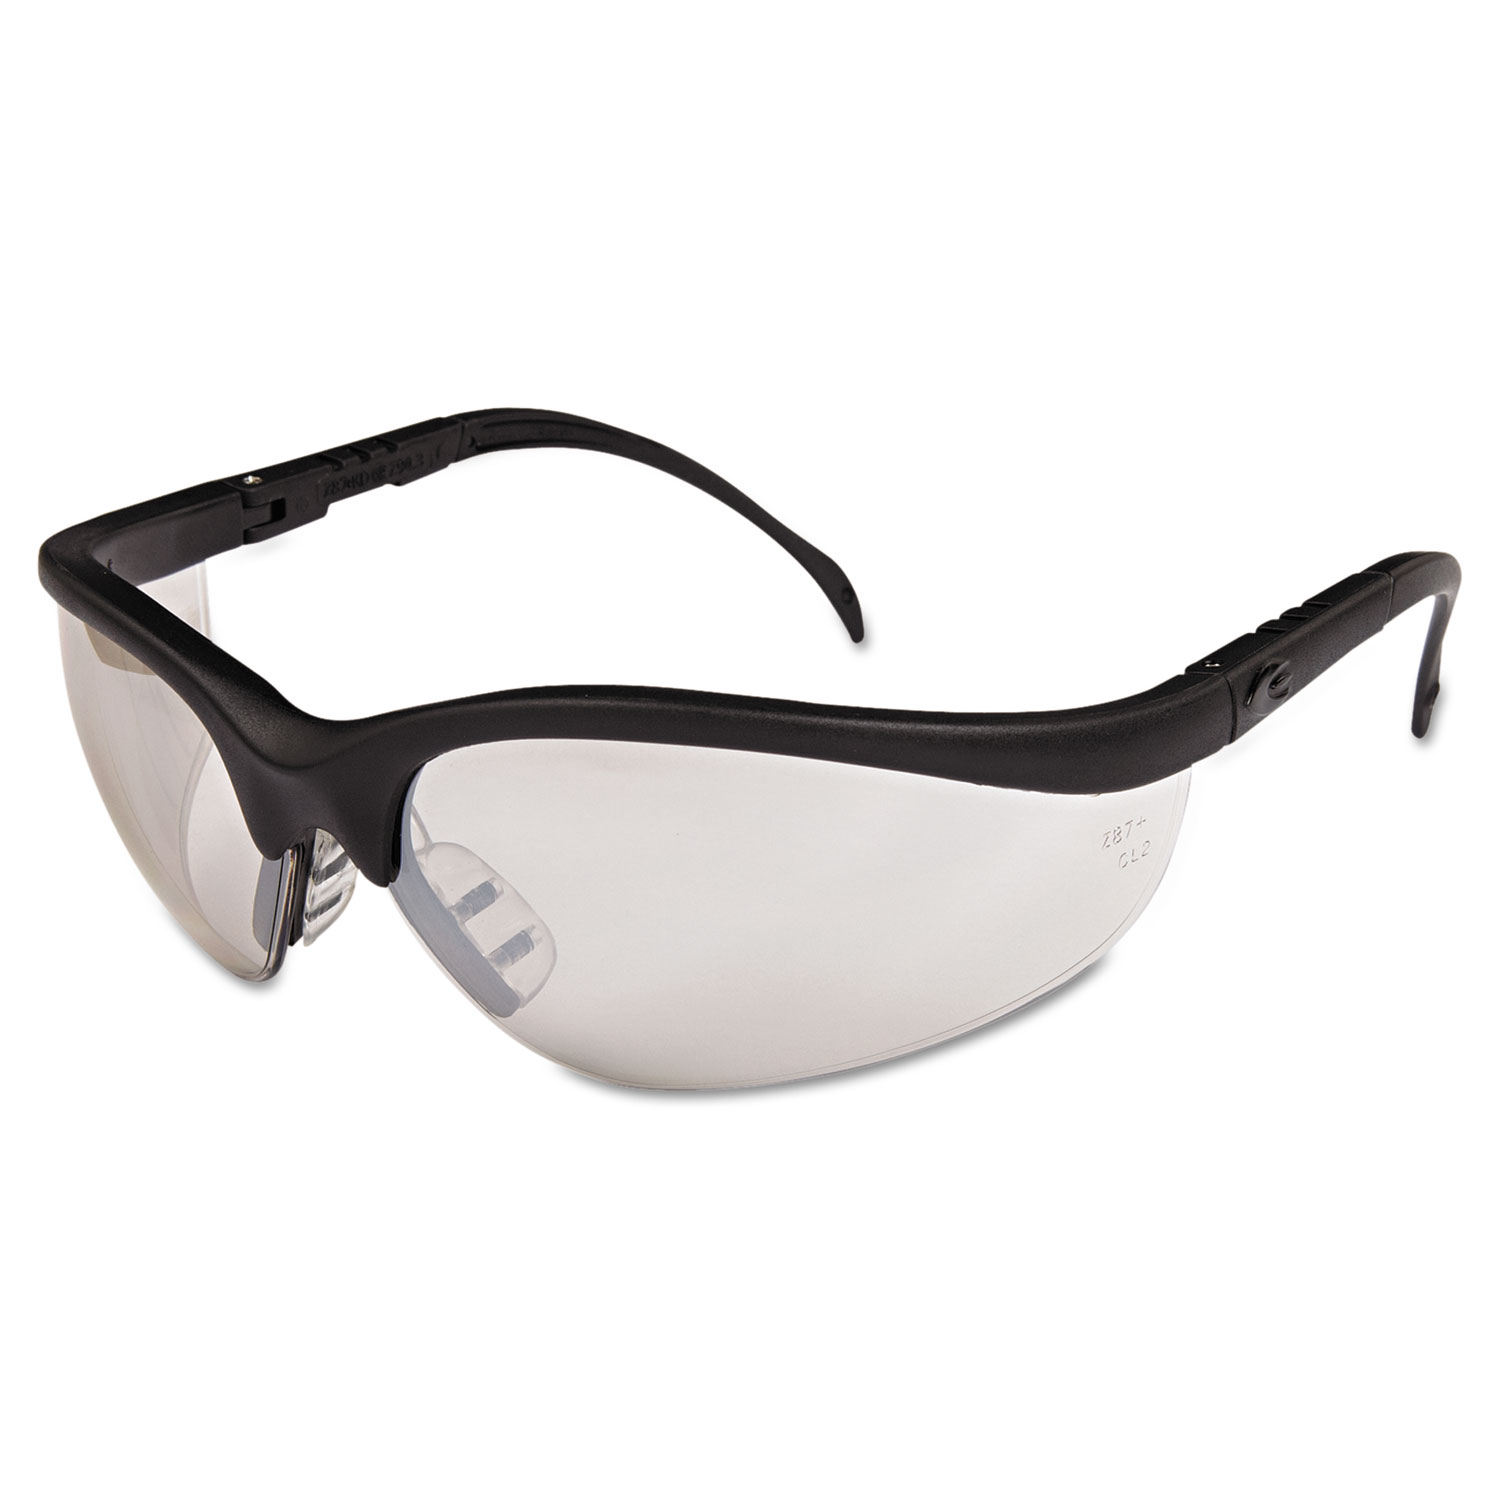  MCR Safety KD119 Klondike Safety Glasses, Black Matte Frame, Clear Mirror Lens (CRWKD119) 